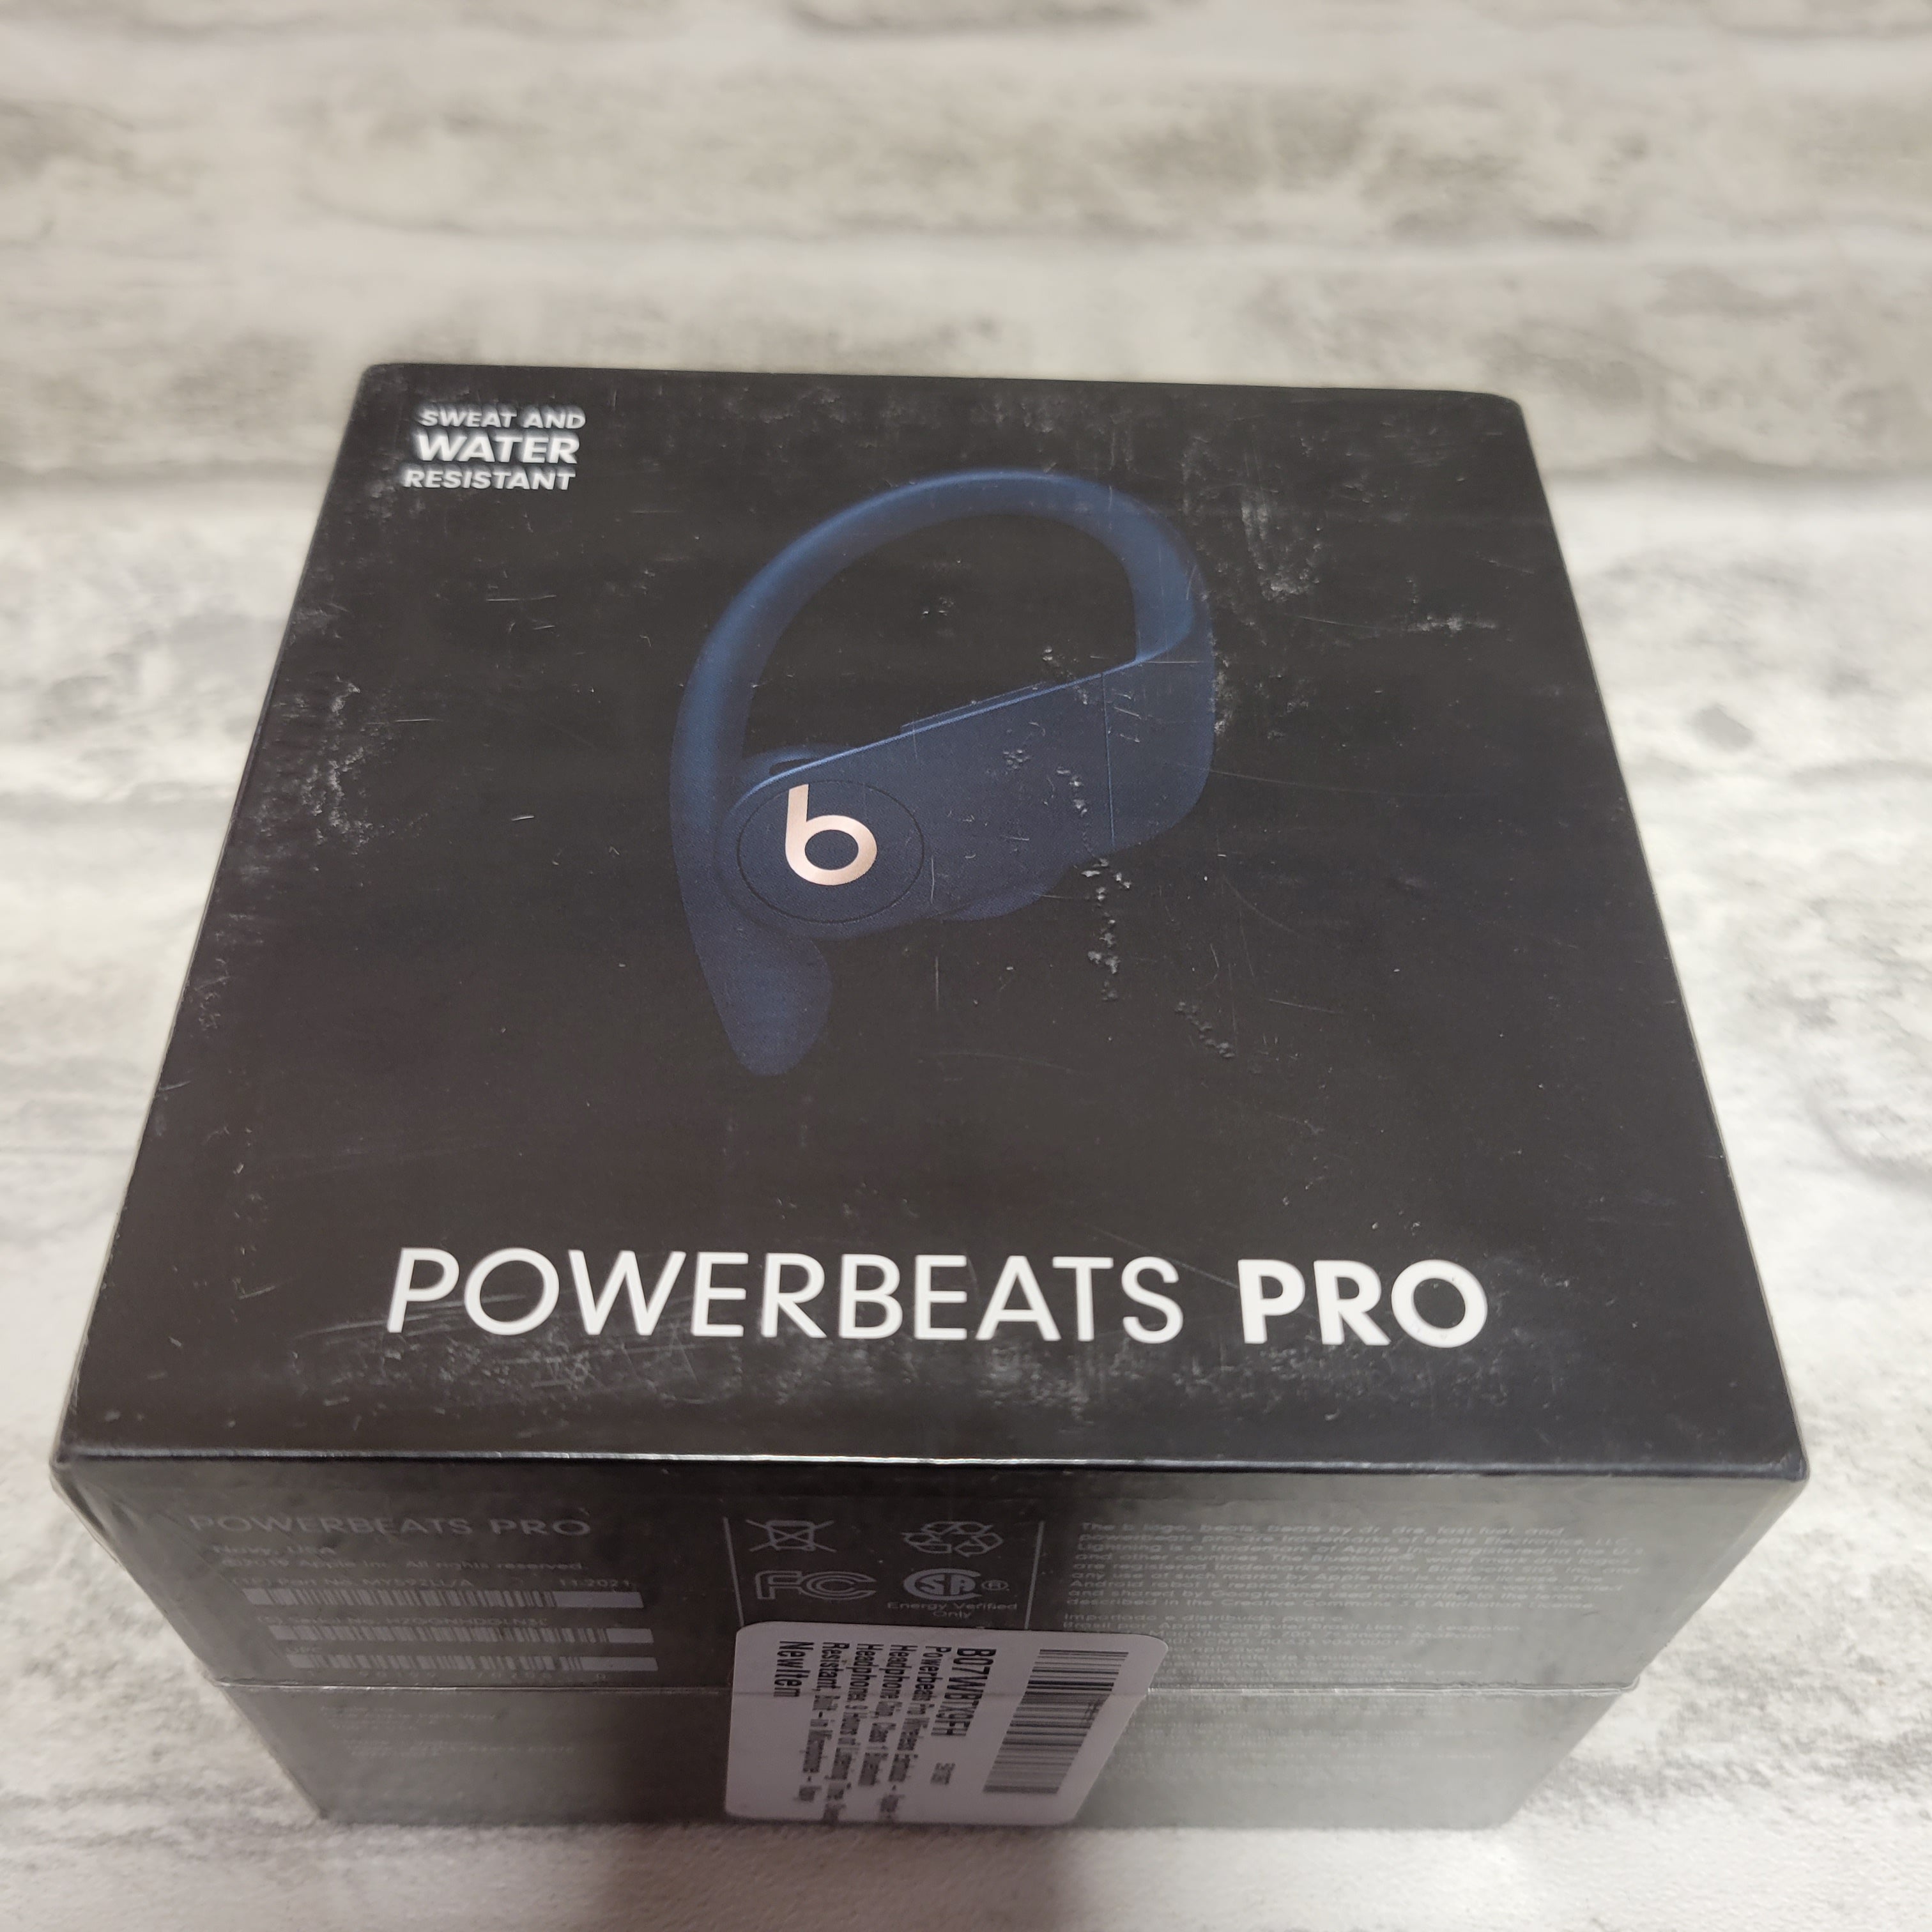 Powerbeats Pro Wireless Earphones - Apple H1 Headphone Chip, Class 1 Bluetooth, 9 Hours of Listening Time, Sweat Resistant Earbuds, Built-in Microphone - Navy (7772403237102)